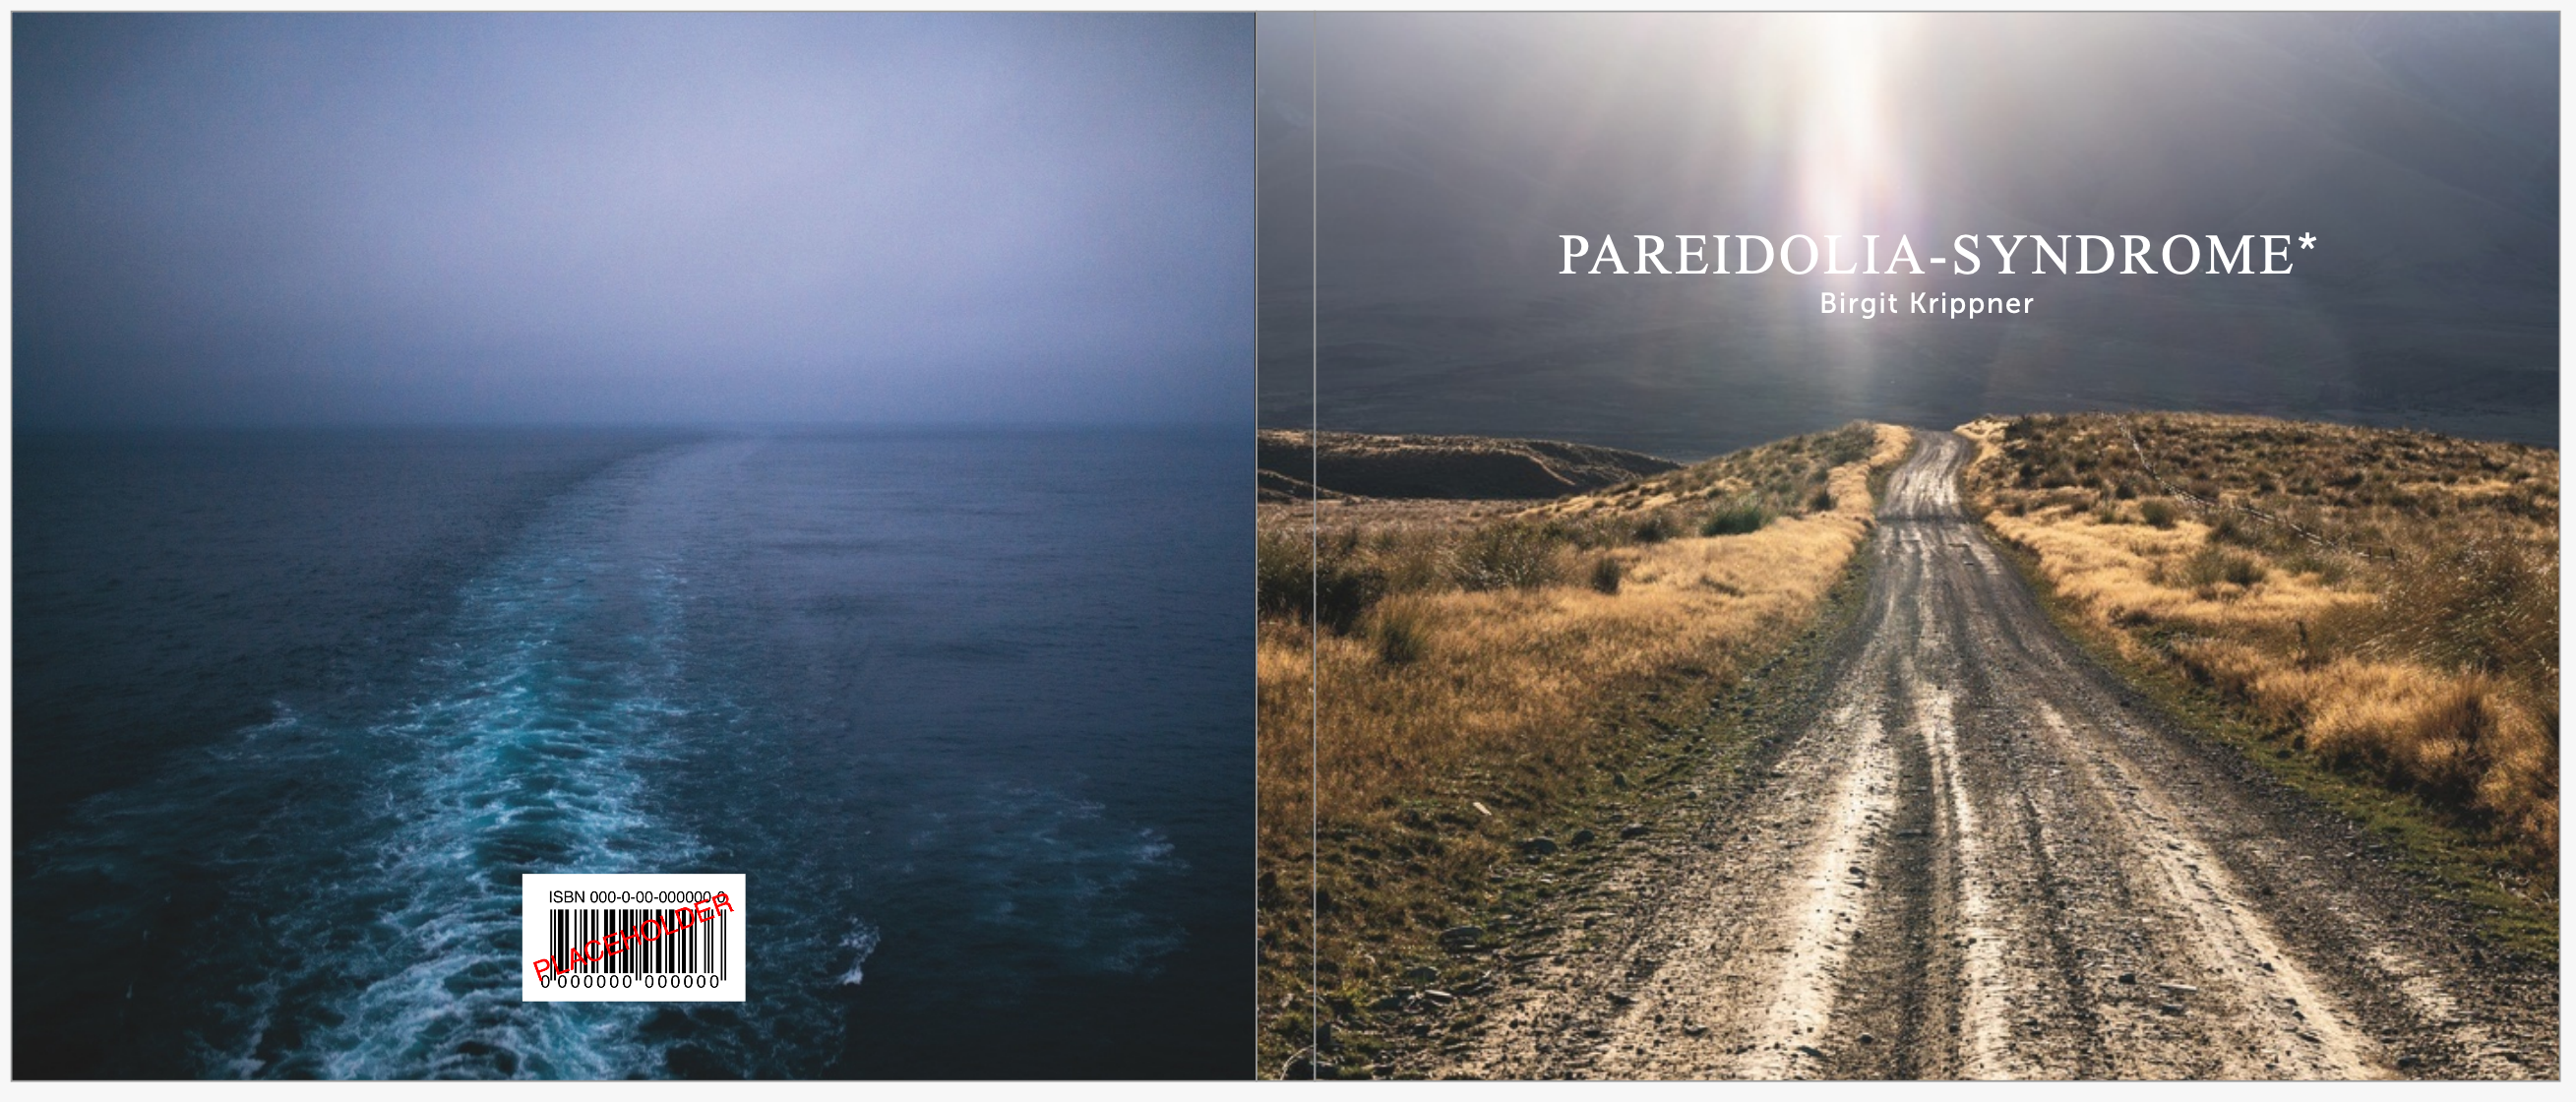 PAREIDOLIA-SYNDROME, a photo book project